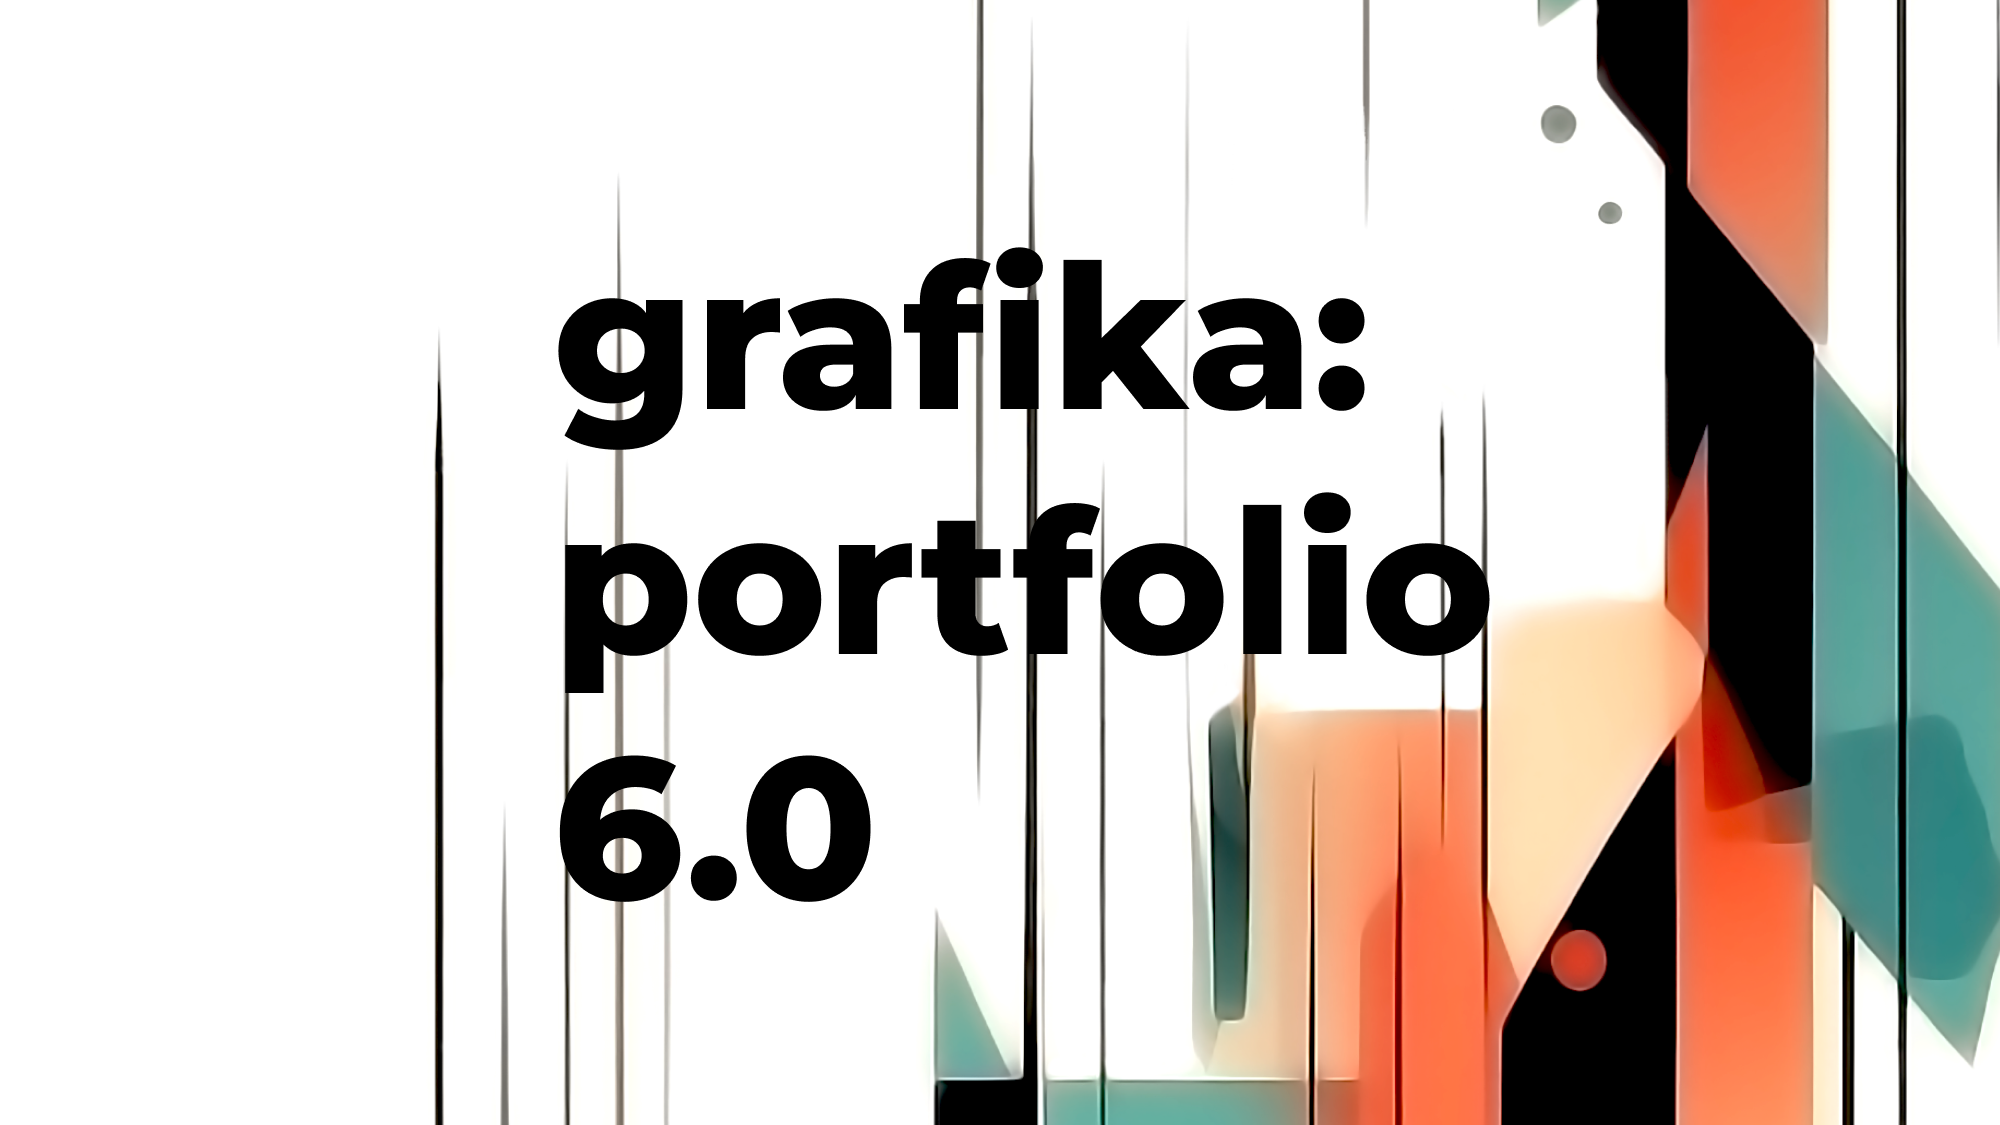 Grafika: portfolio 6.0